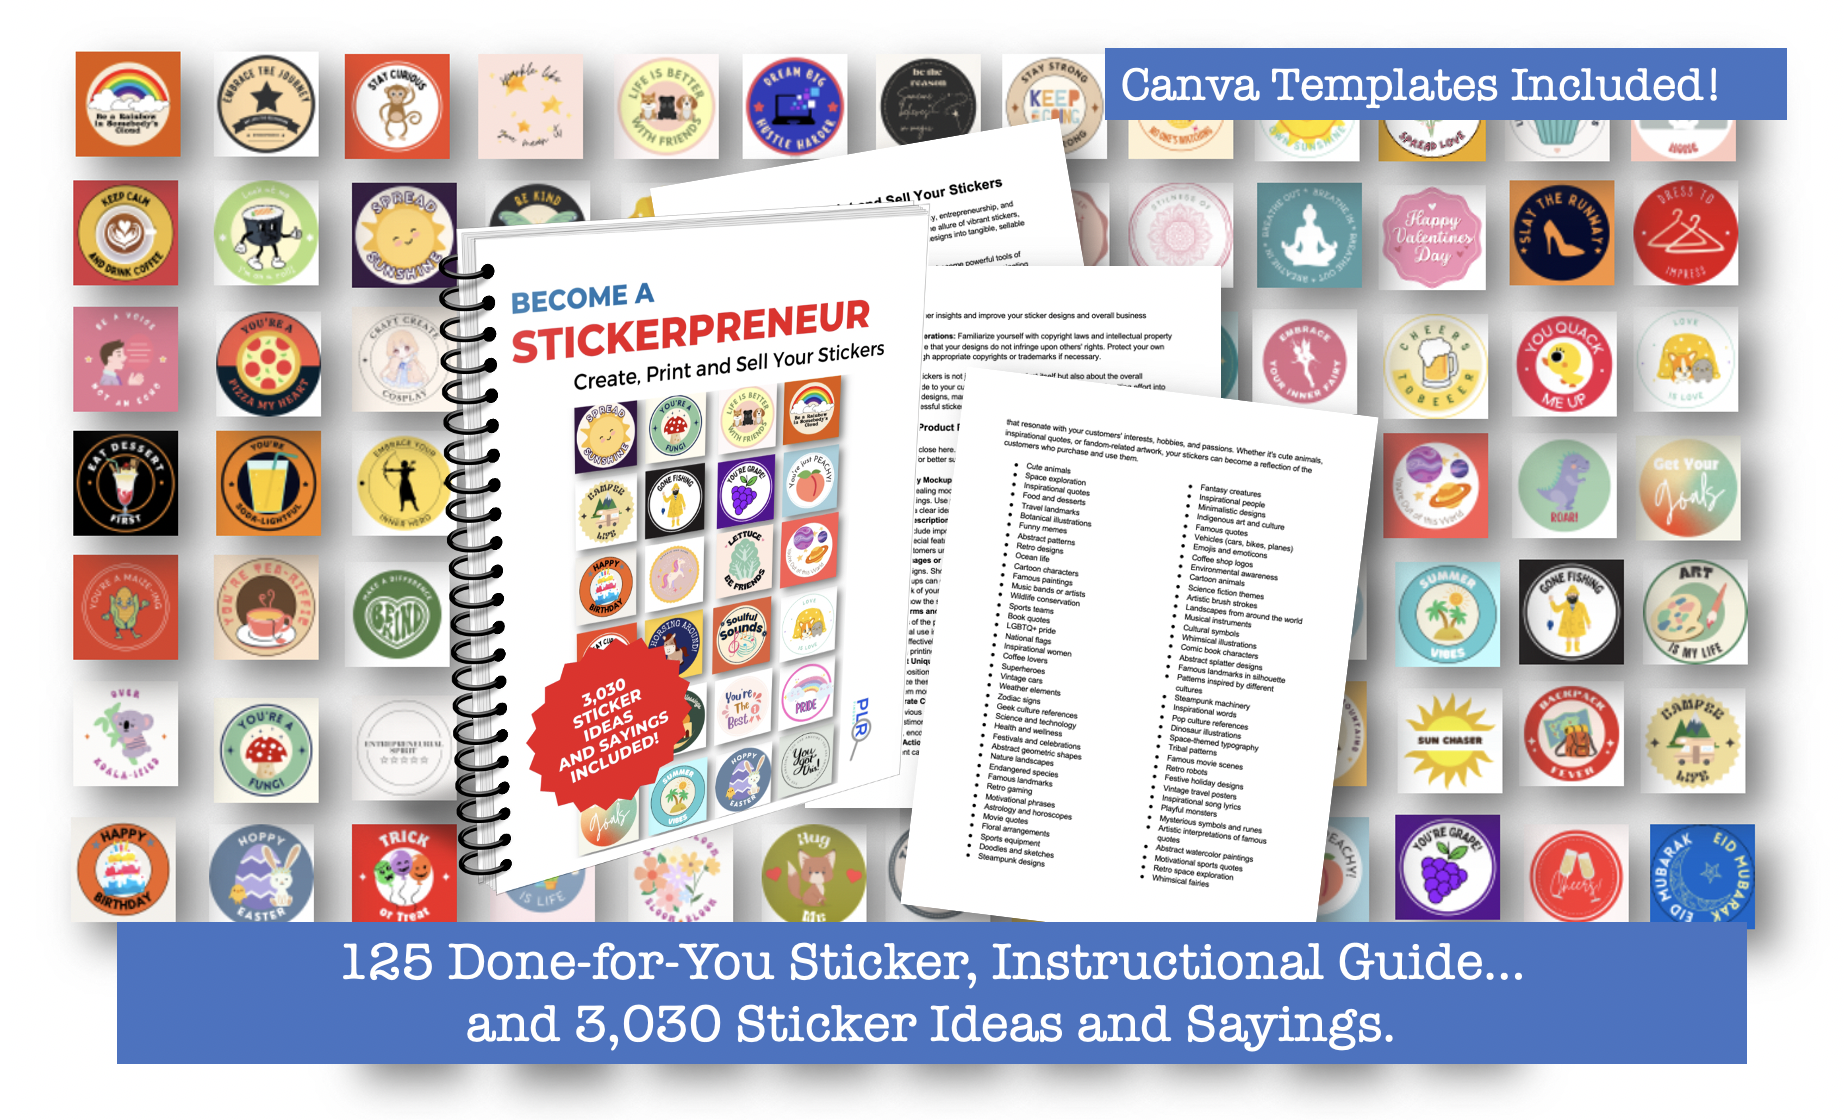 Become a Stickerpreneur